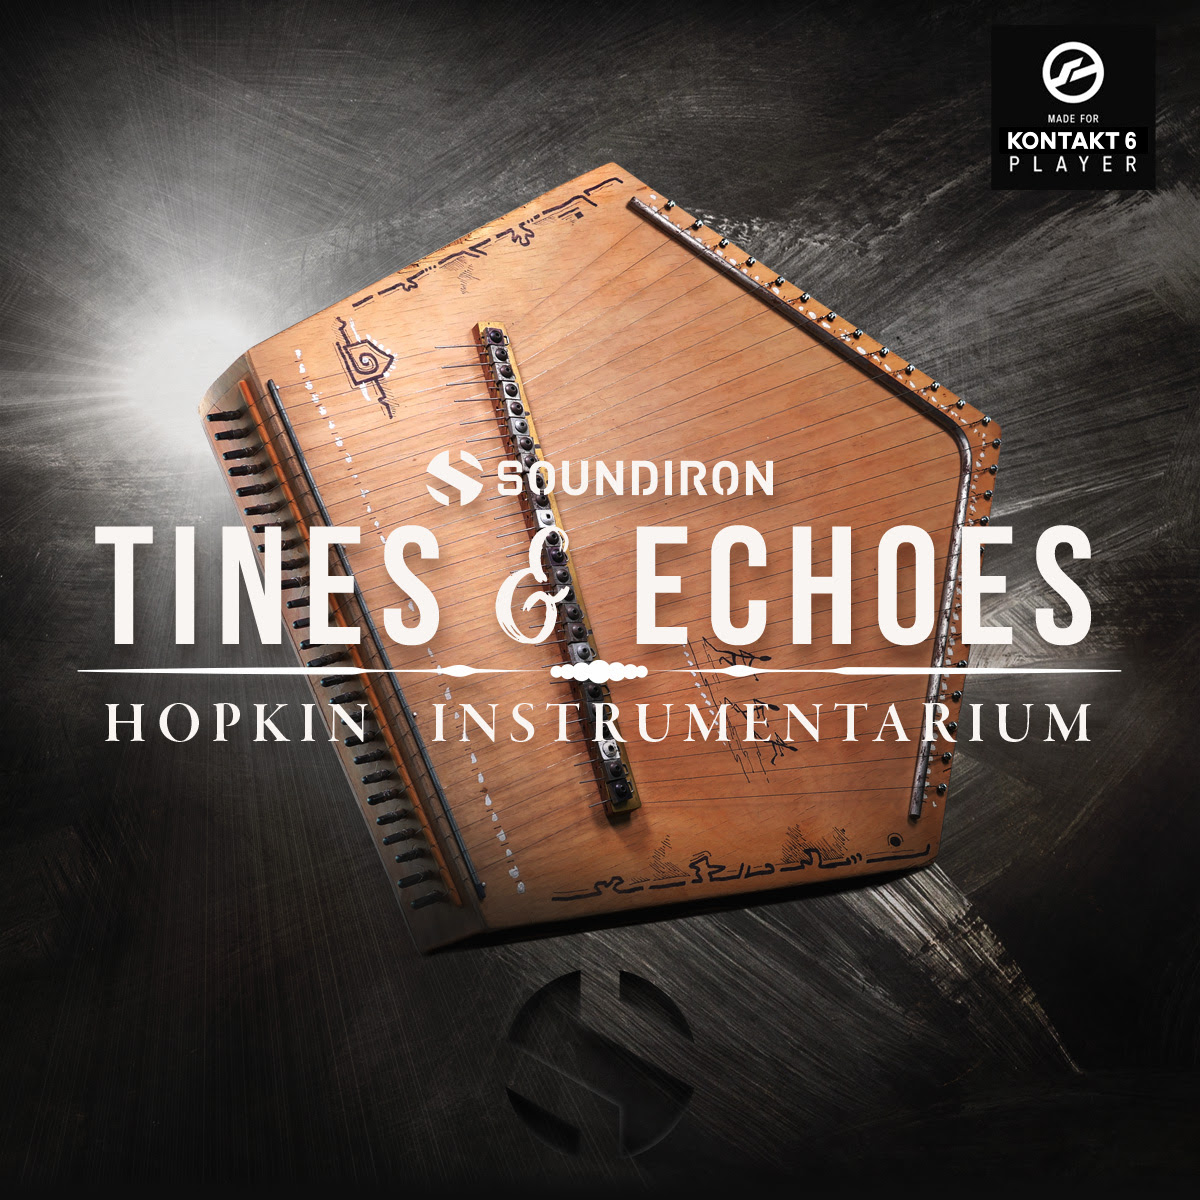 Soundiron Releases Hopkin Instrumentarium Tines & Echoes